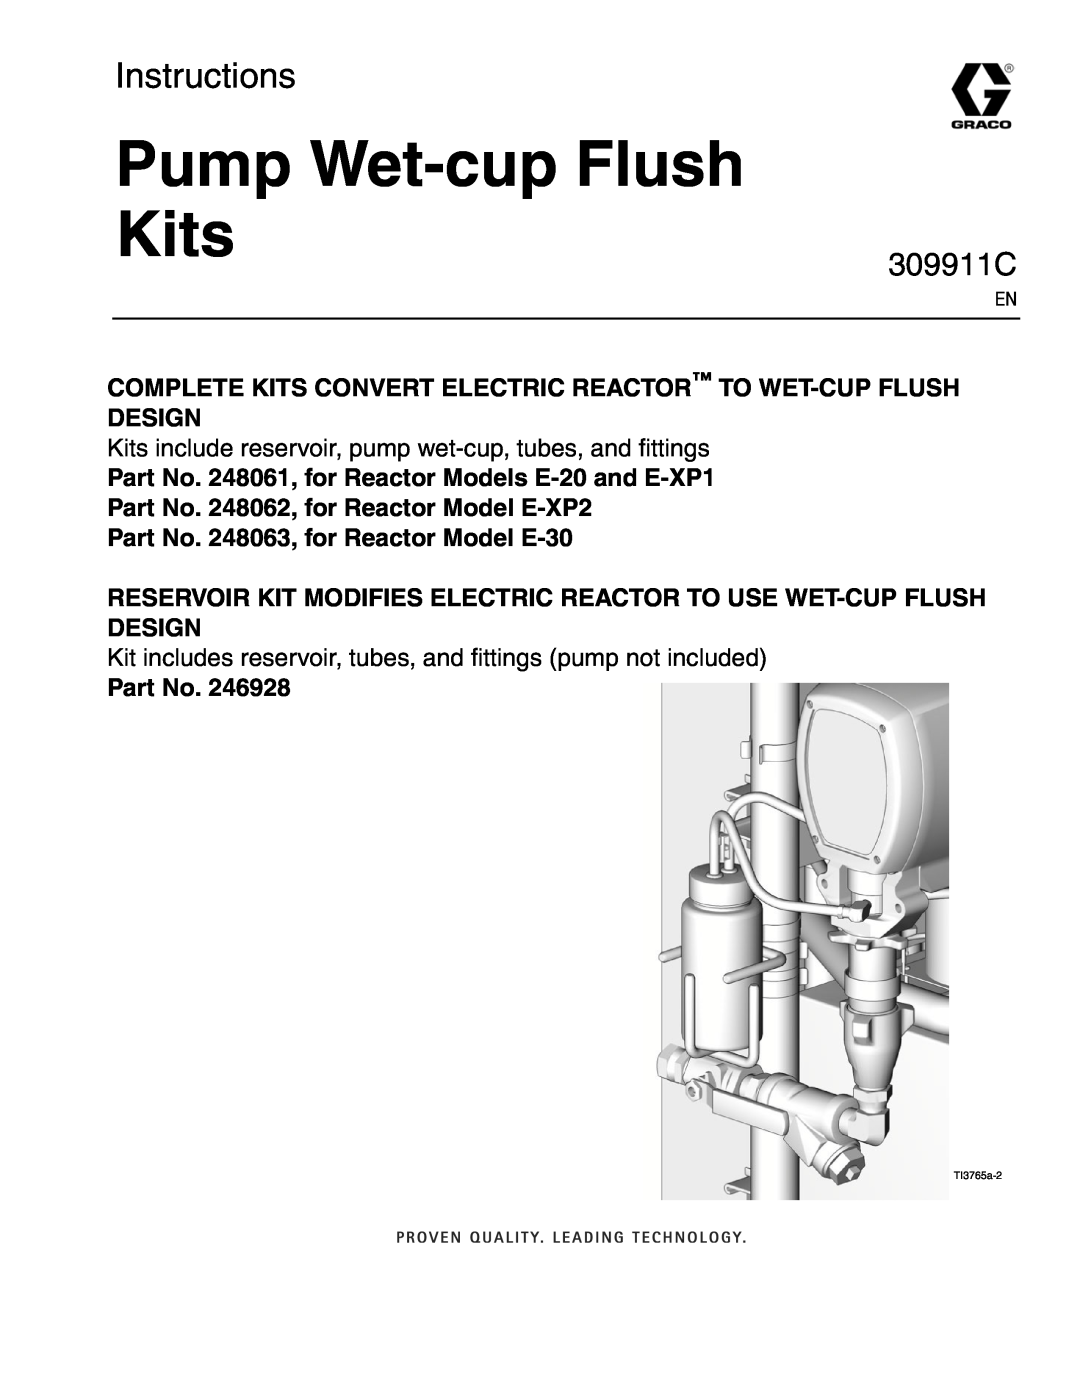 Graco 309911C manual Pump Wet-cupFlush Kits, Instructions 